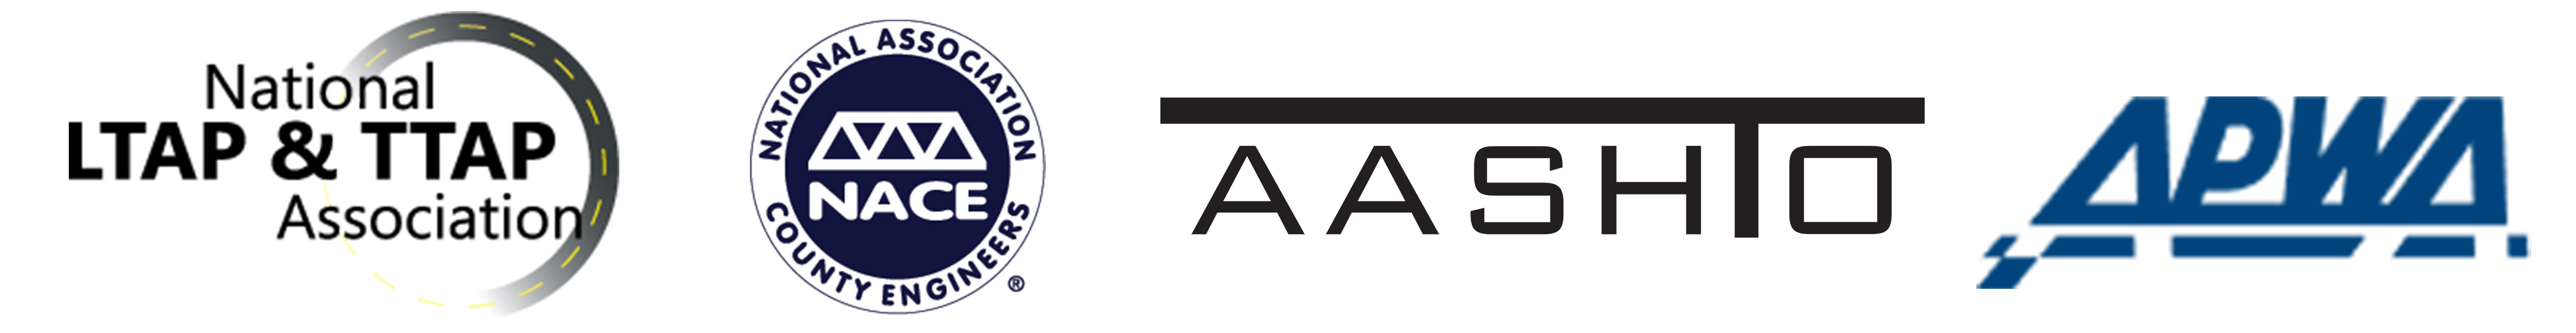 LTAP affiliates logos banner